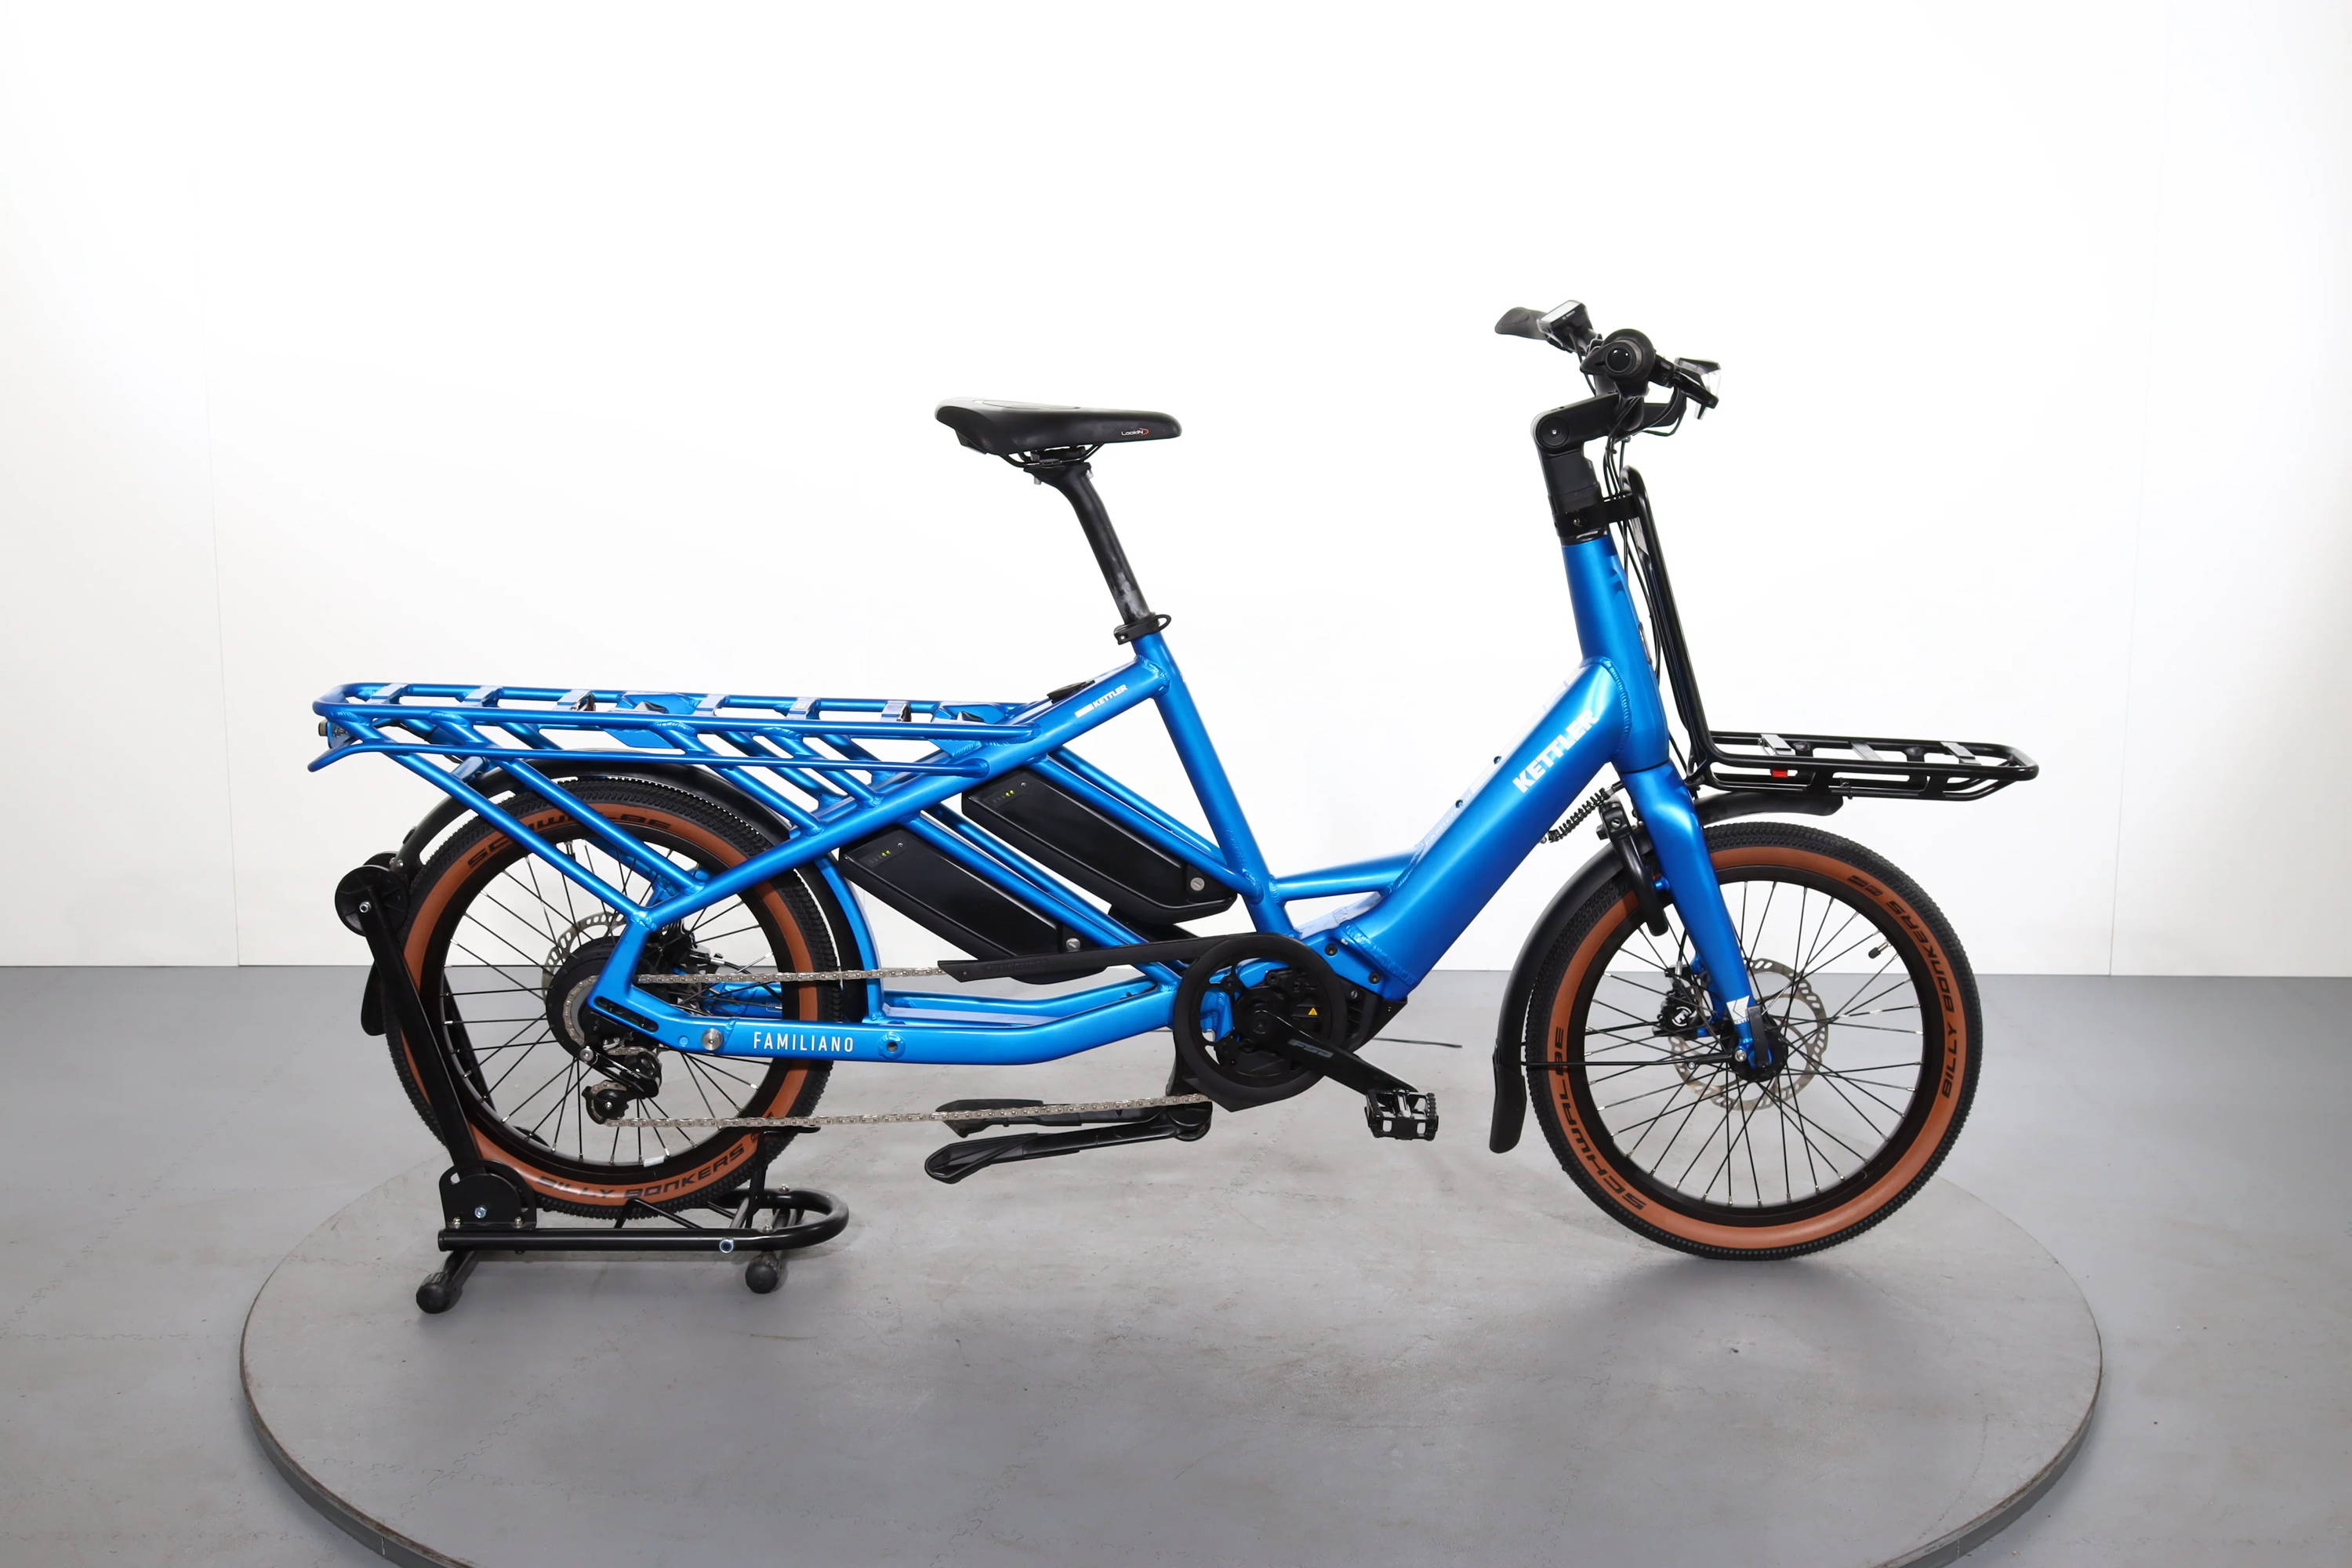 Kettler Familiano L-N electric cargo bike.